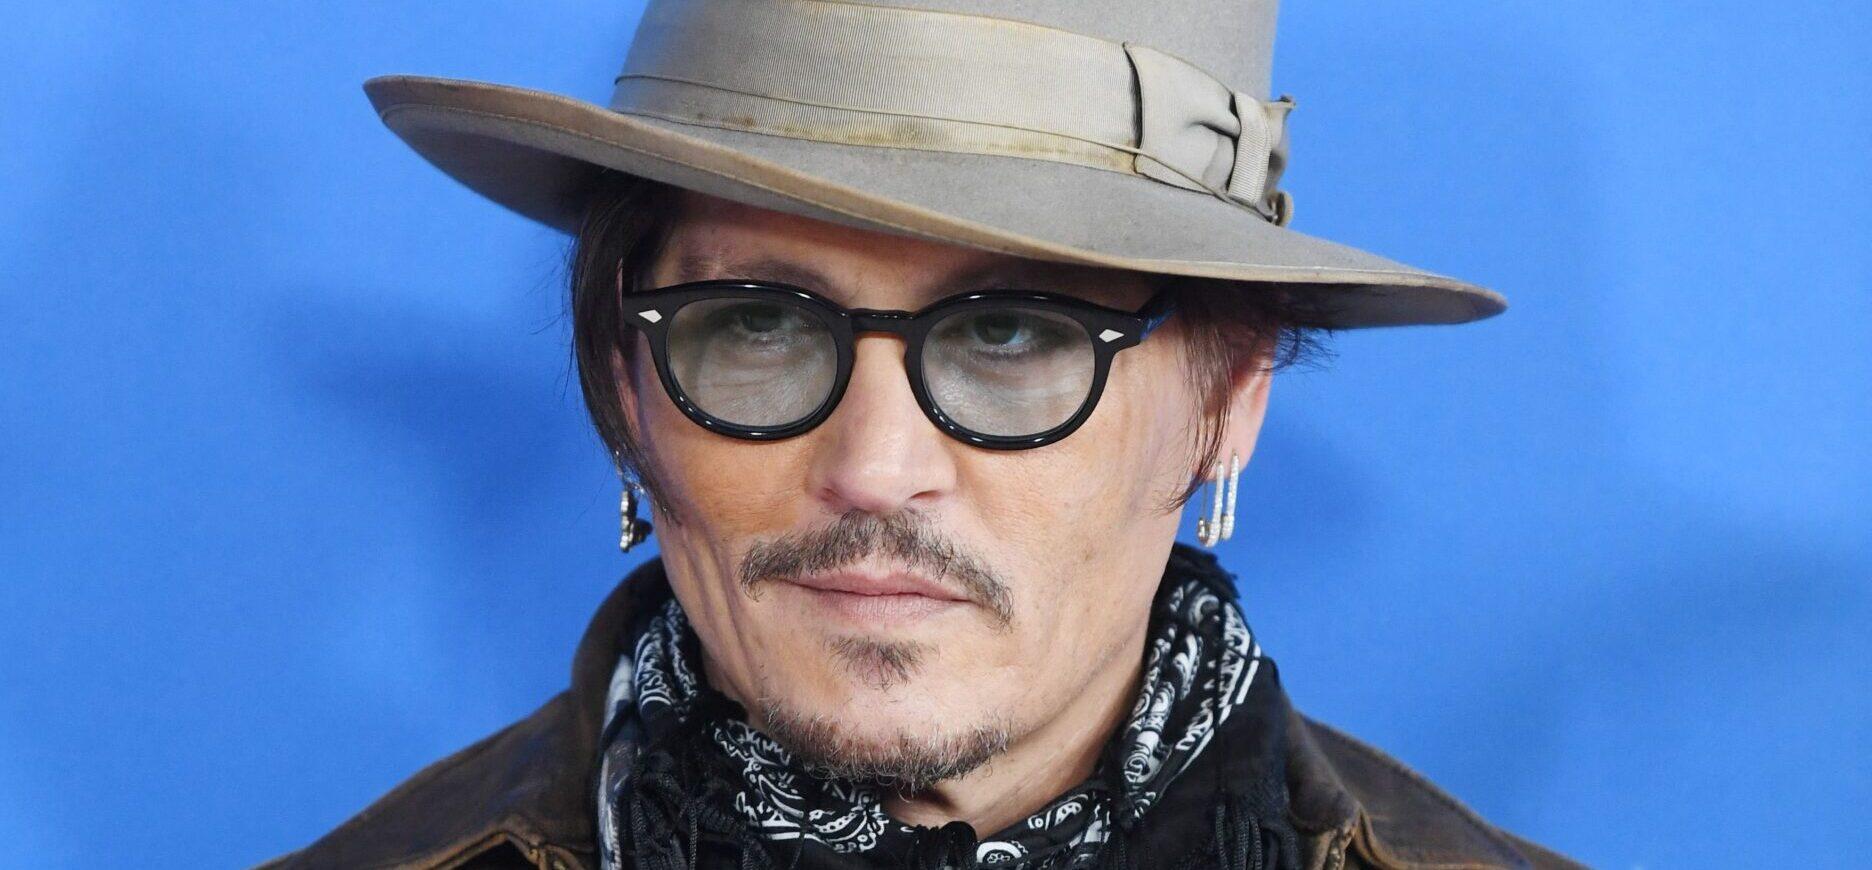 Johnny Depp May Return To Disney Following Amber Heard Drama